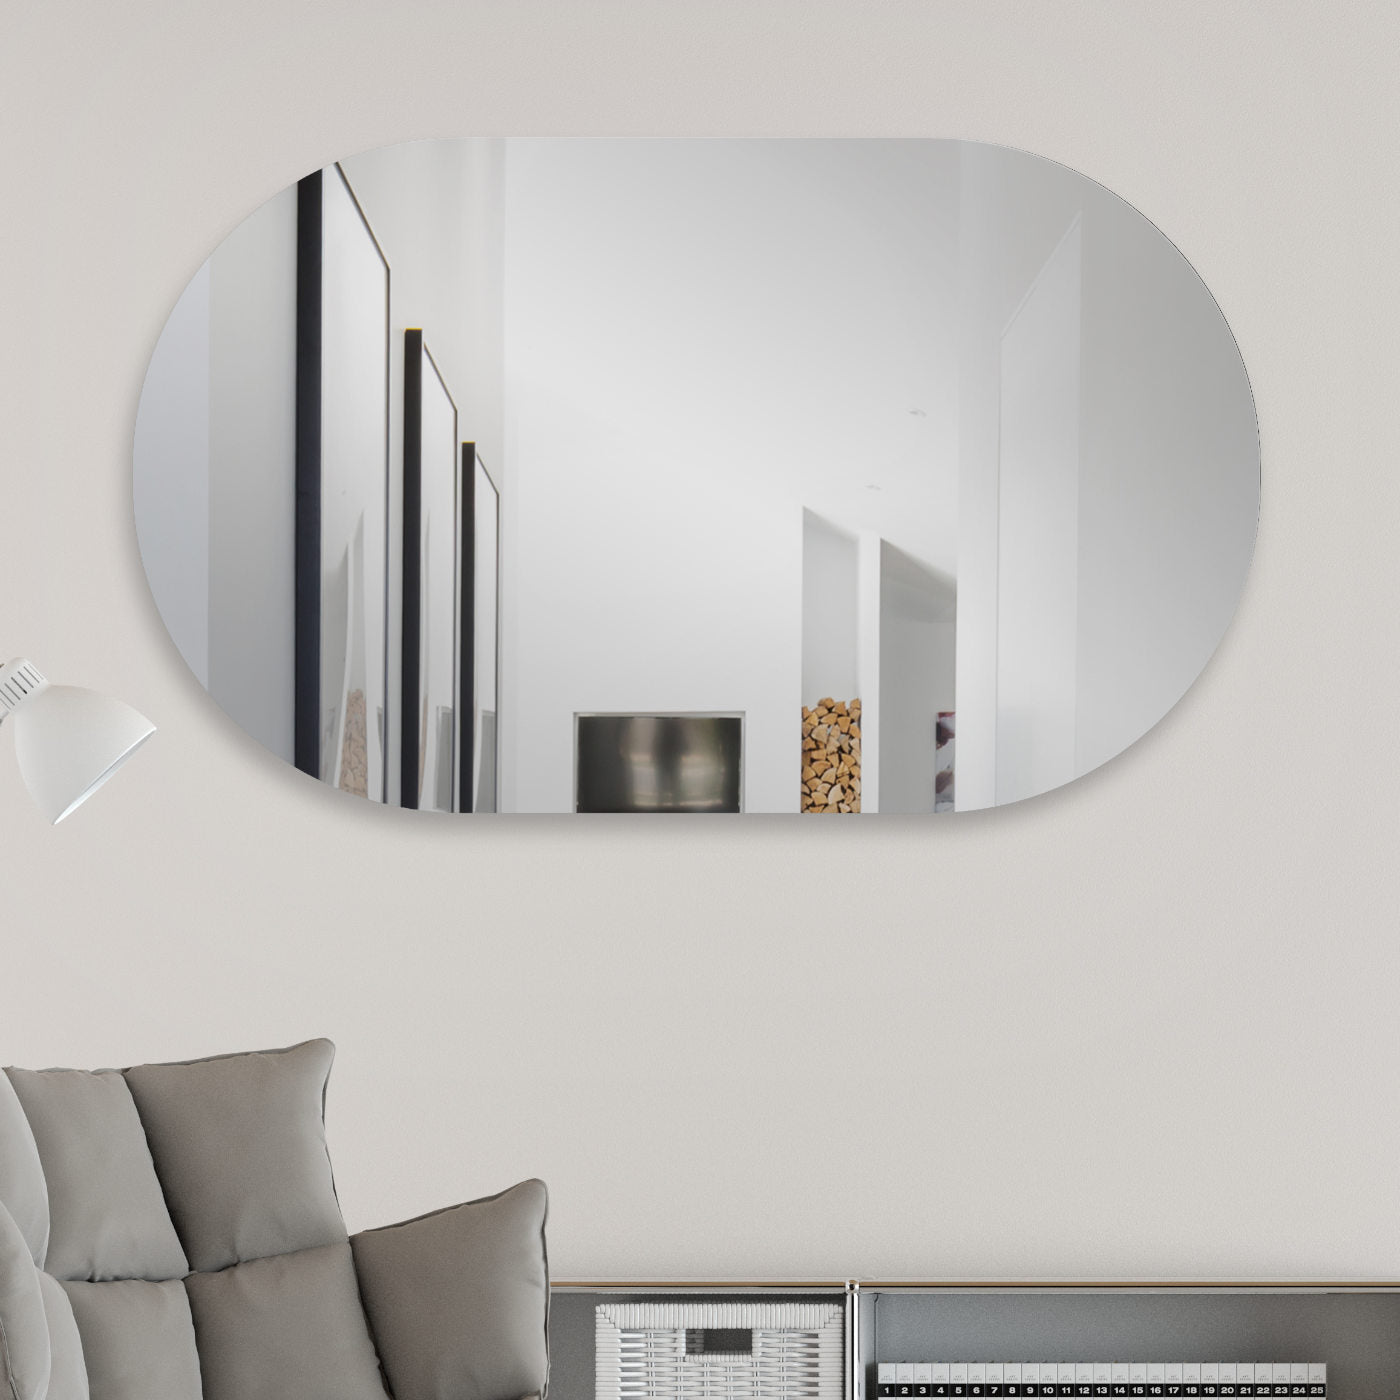 Ovaler randloser Wandspiegel im skandinavischen Design ohne Beleuchtung